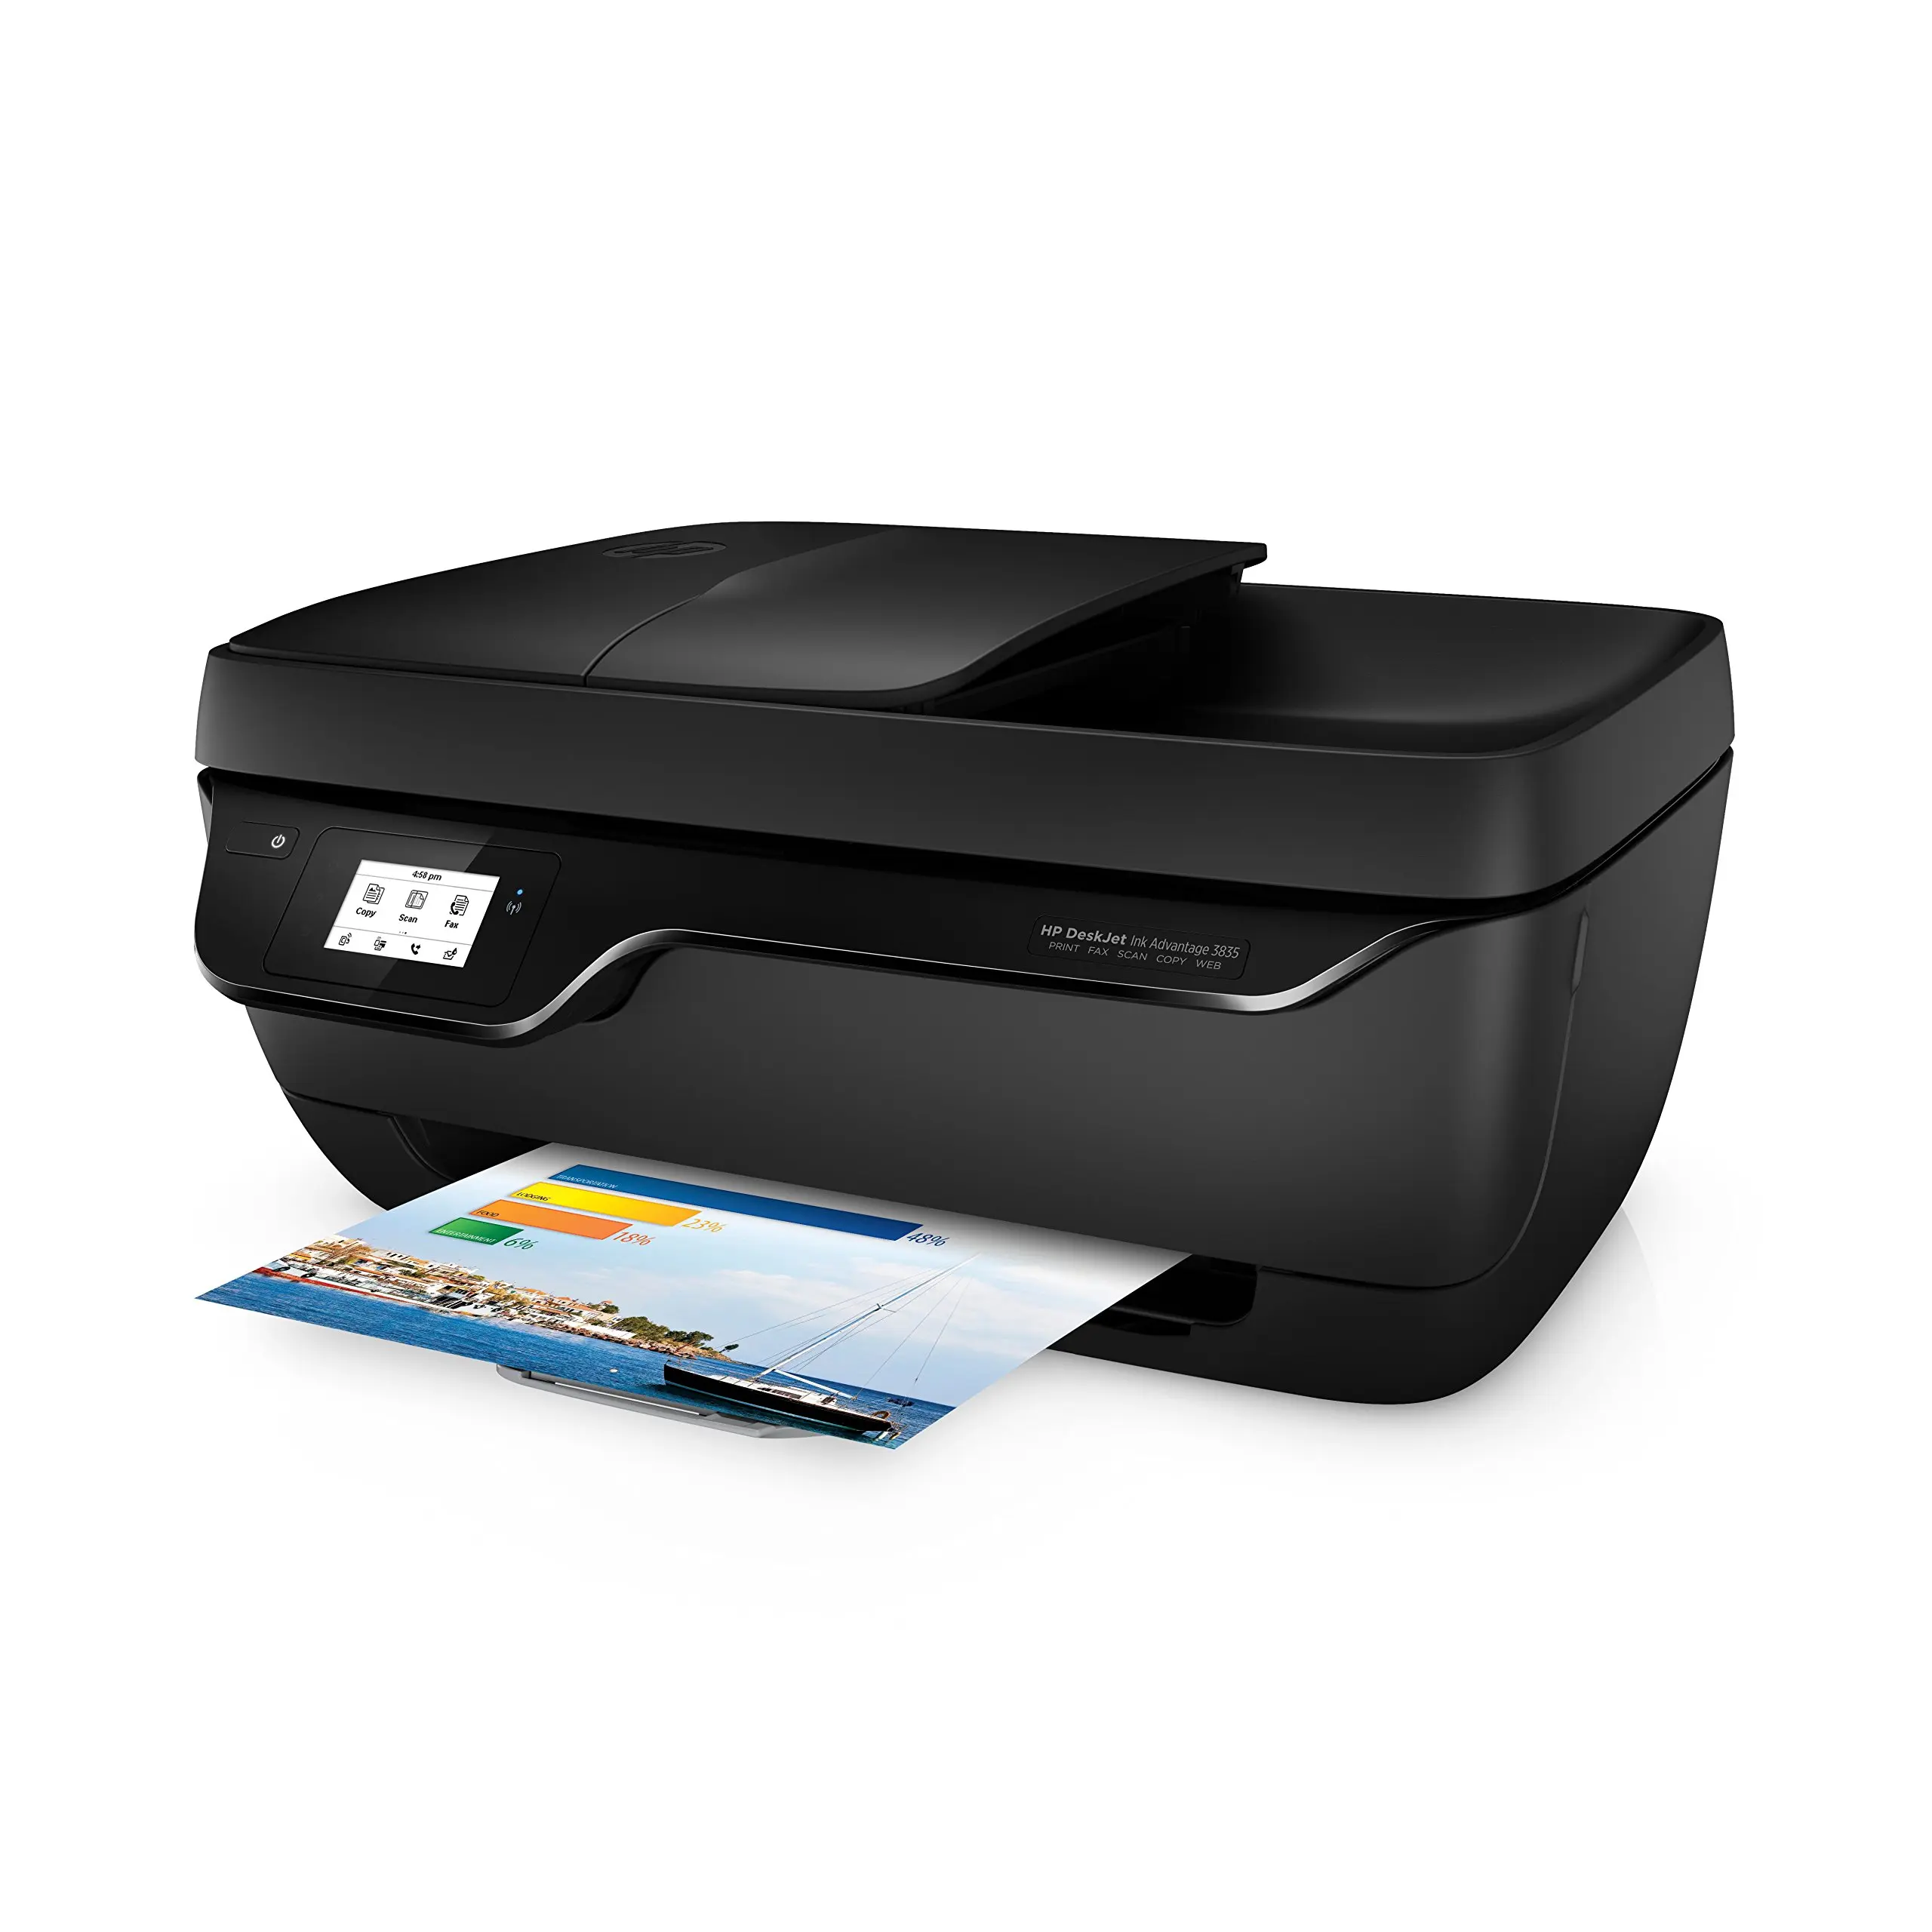 hewlett-packard deskjet printer 3835 - What cartridge does HP DeskJet 3835 use